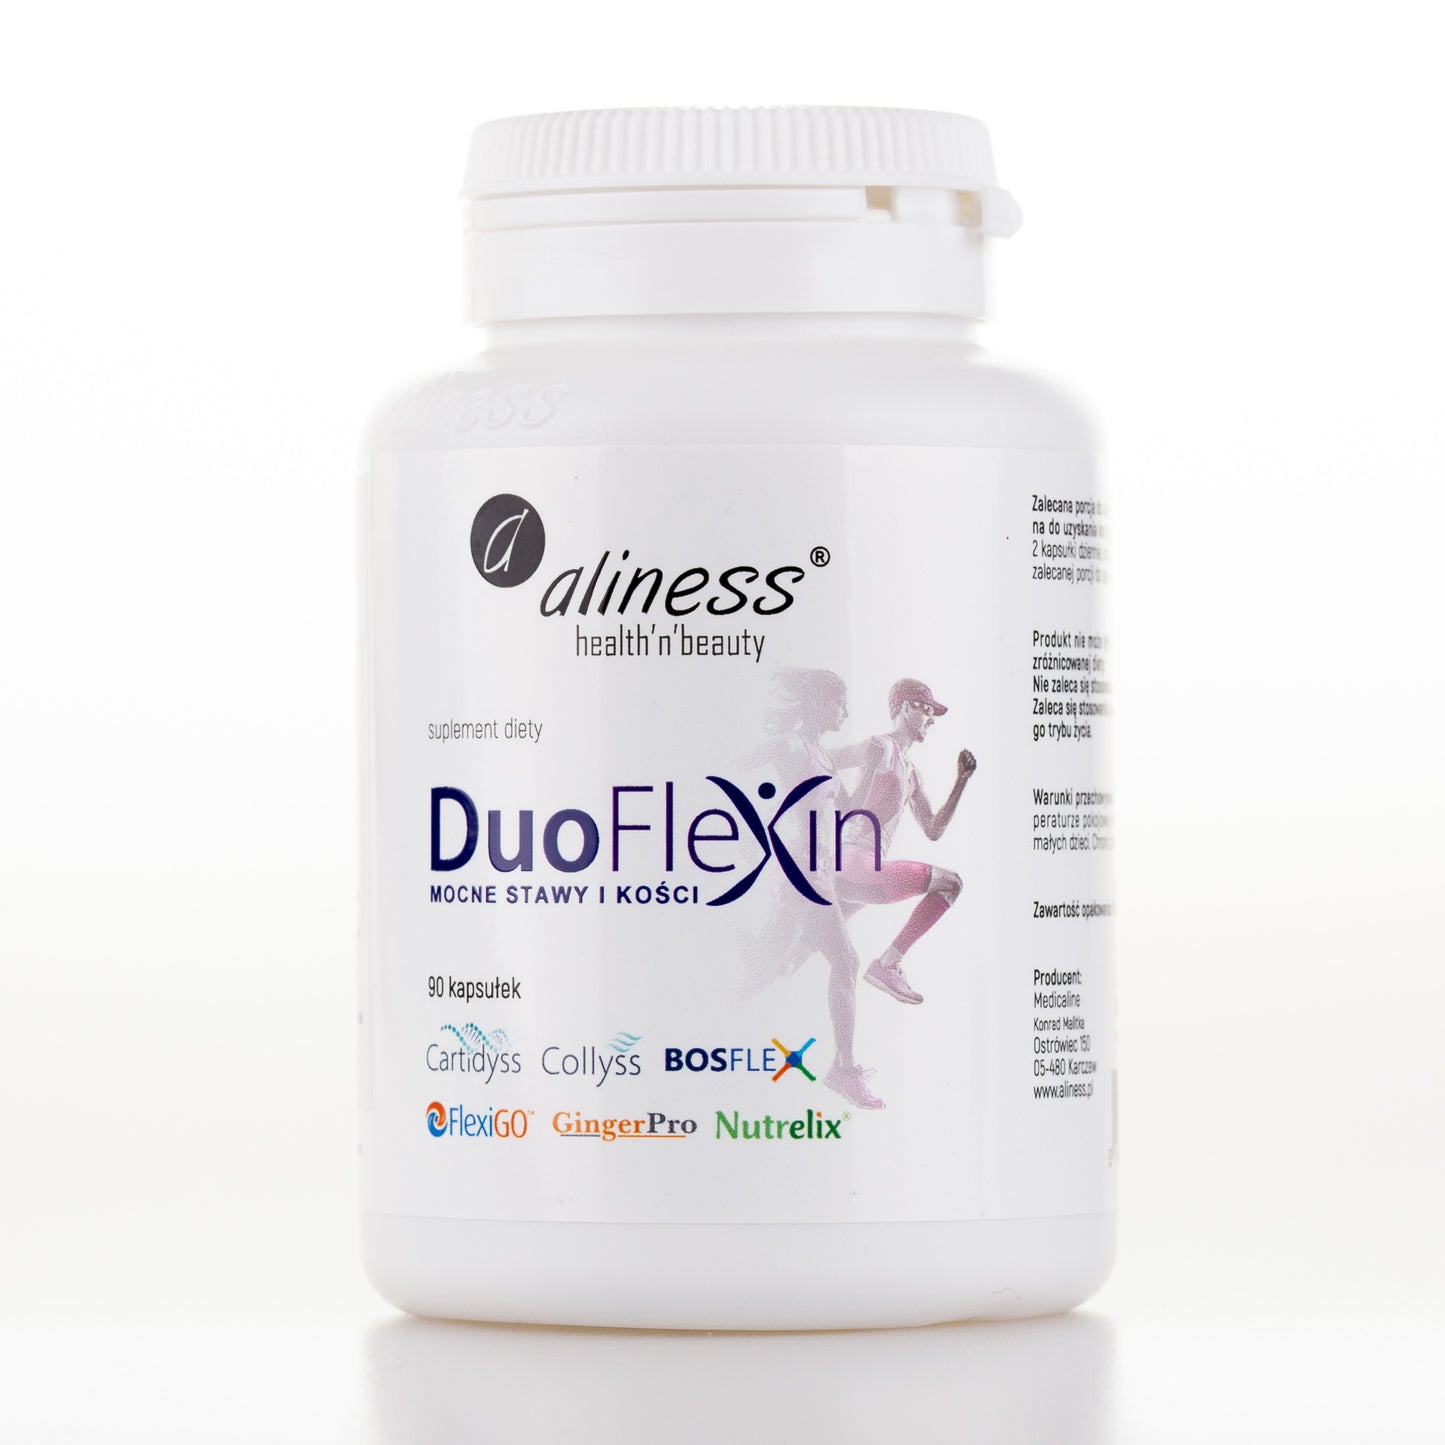 Aliness Duoflexin® 90 kapsułek, mocne stawy i kości 100% natural, 90 kapsułek vege